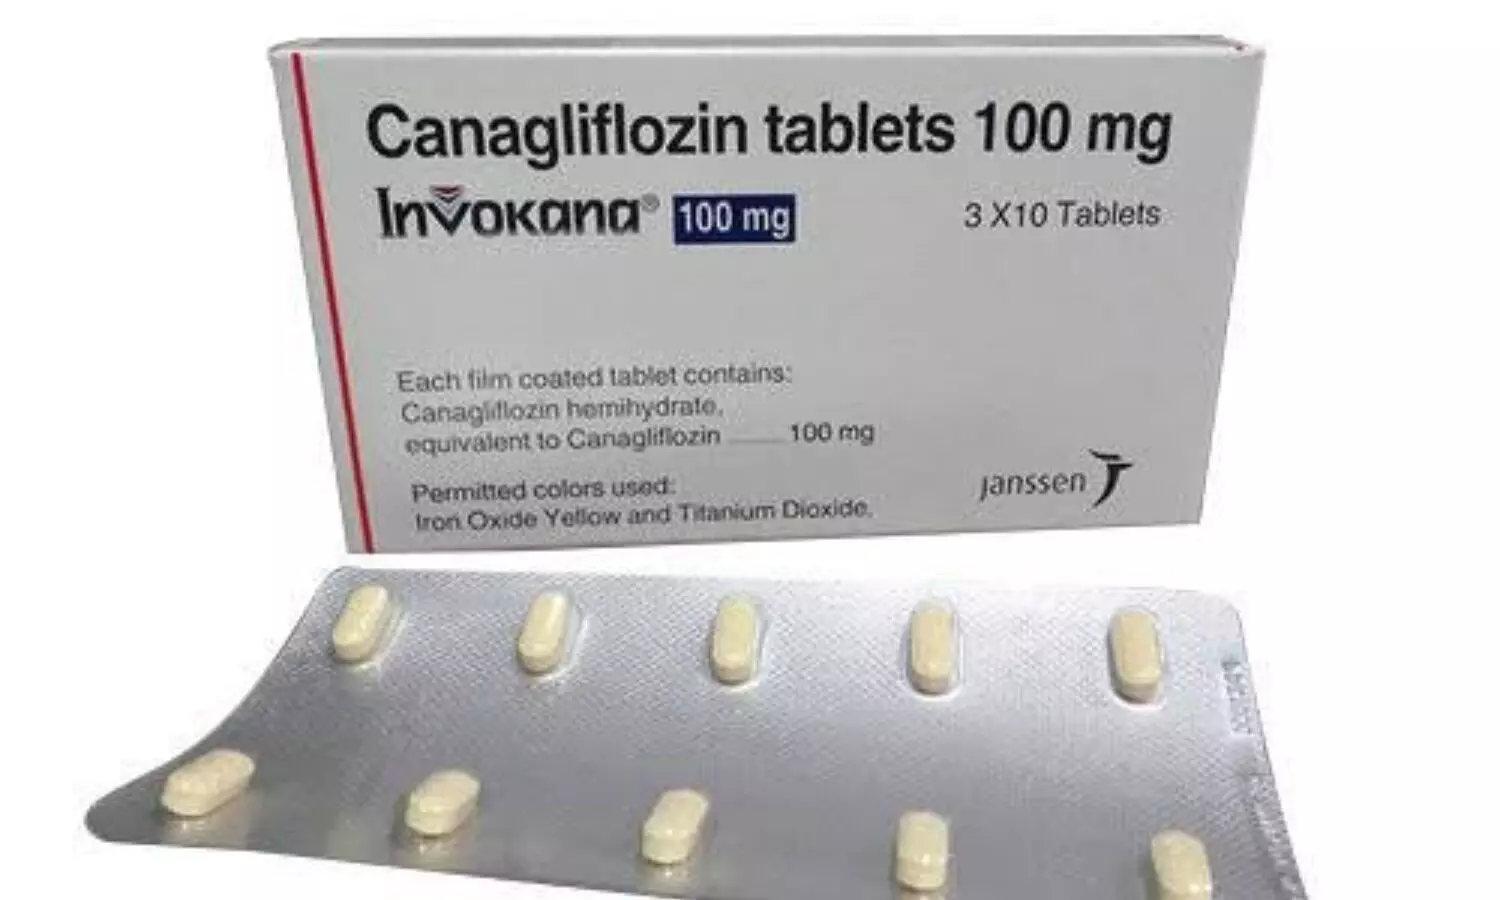 Canagliflozin has no substantial effect on serum potassium levels: CANVAS program